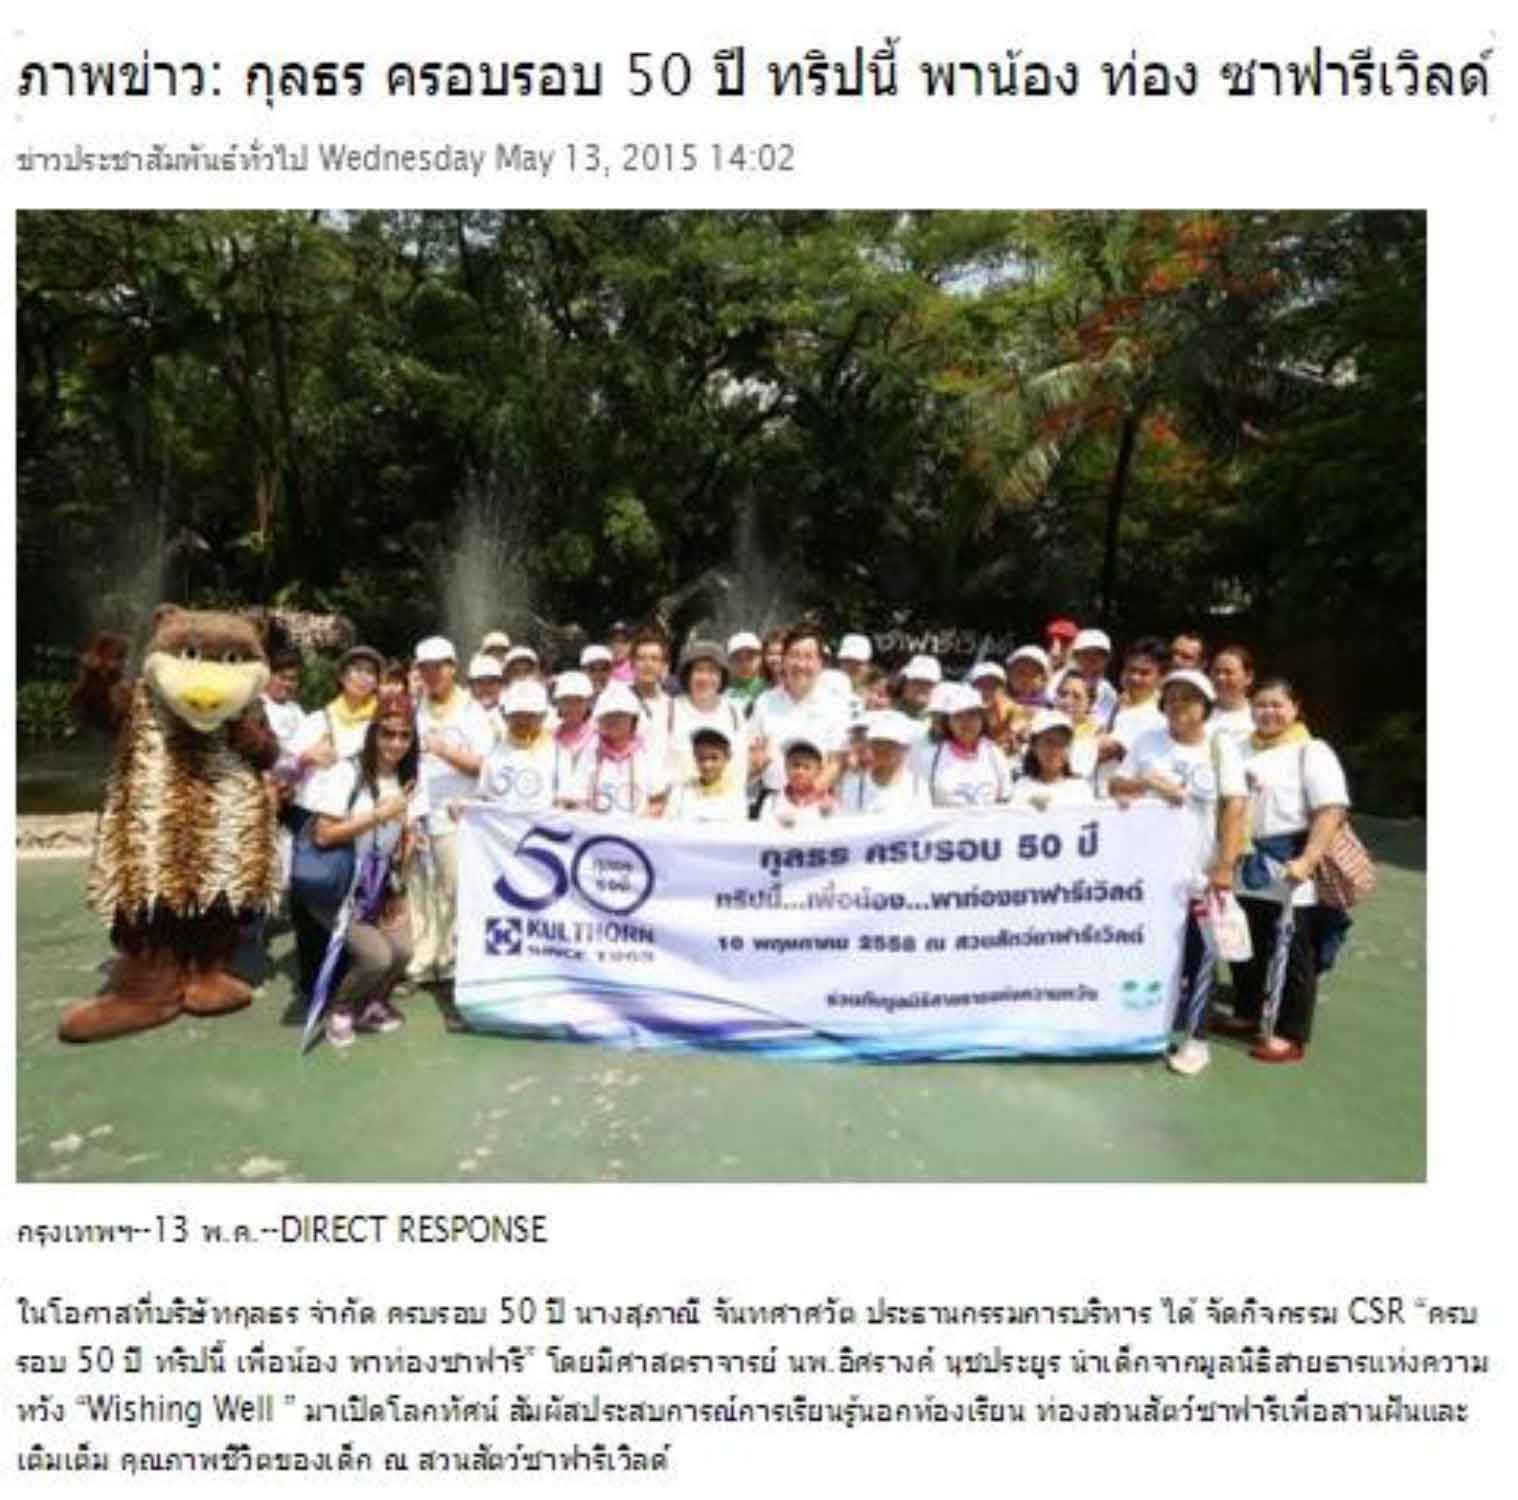 thailand press release news